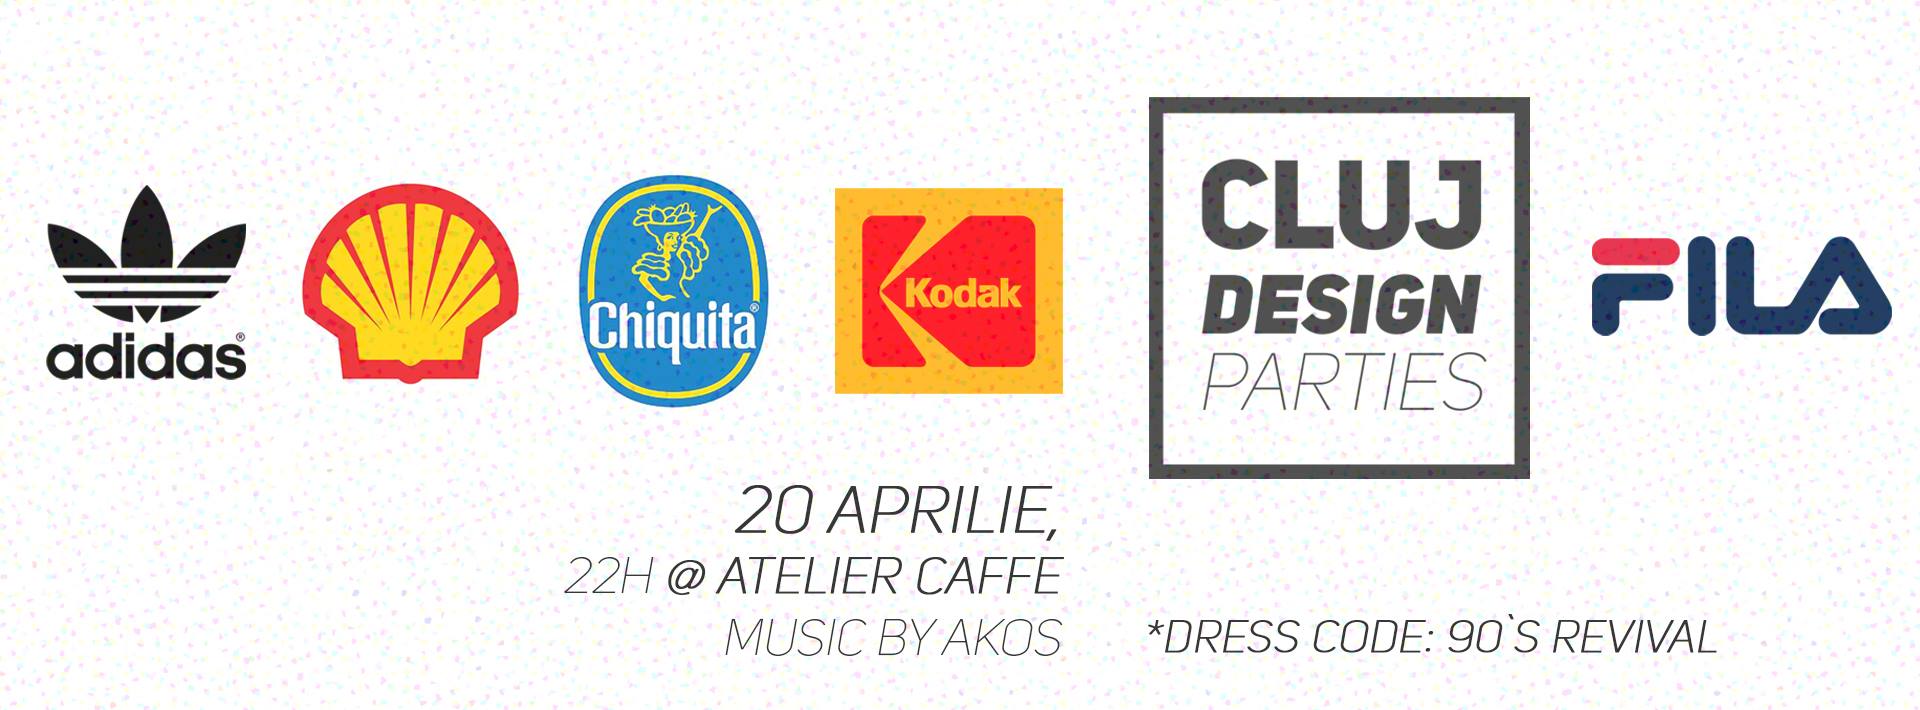 Cluj Design Parties #11